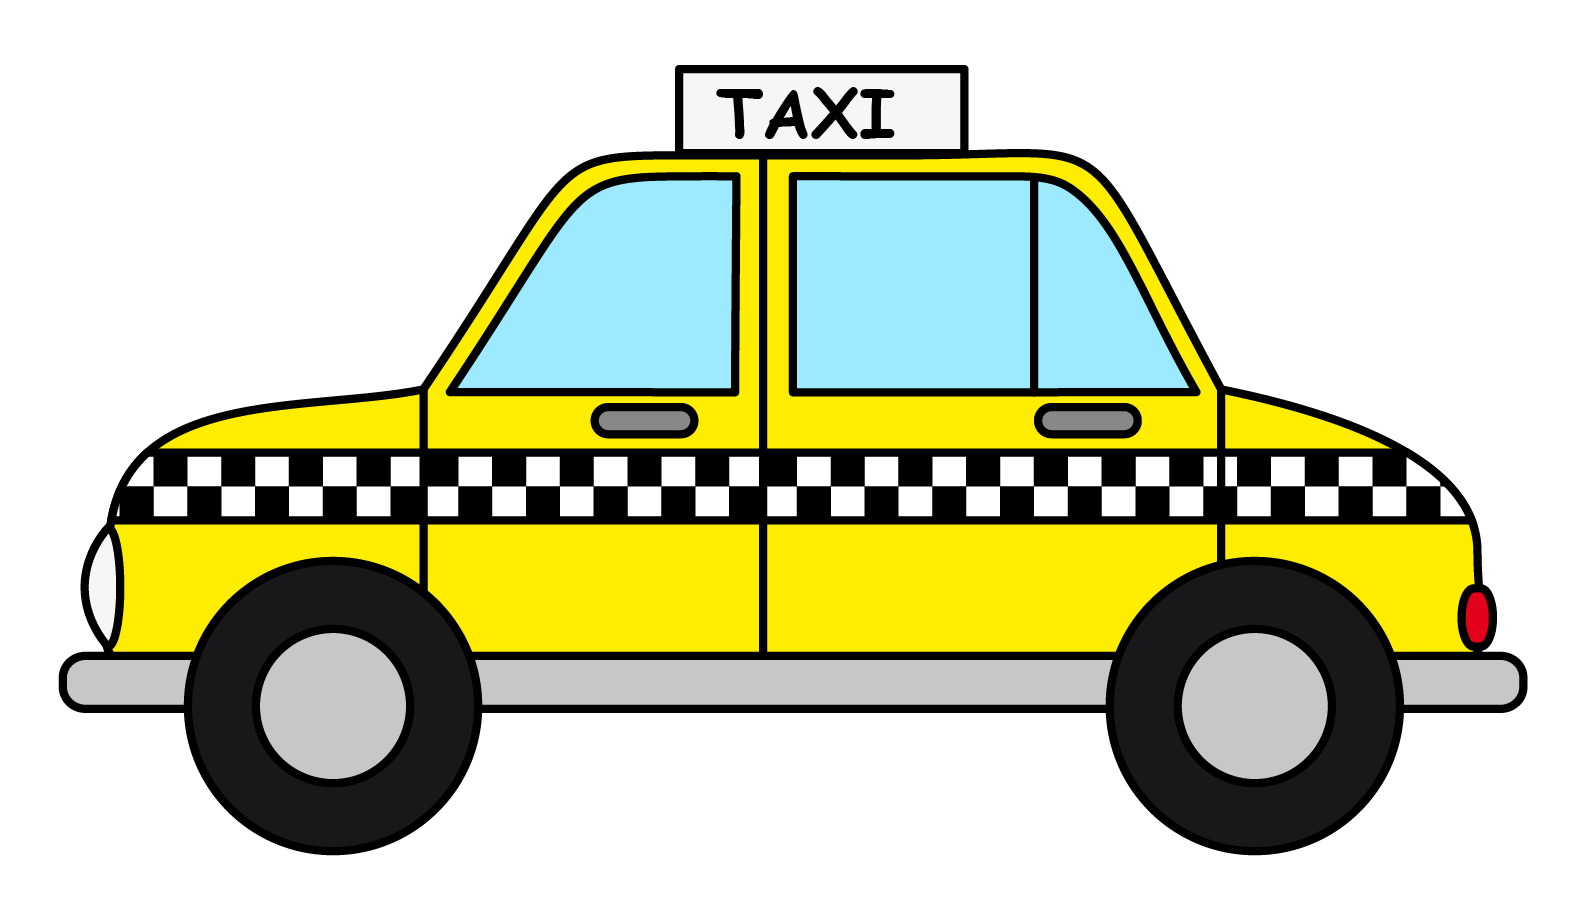 taxi-cab3.png